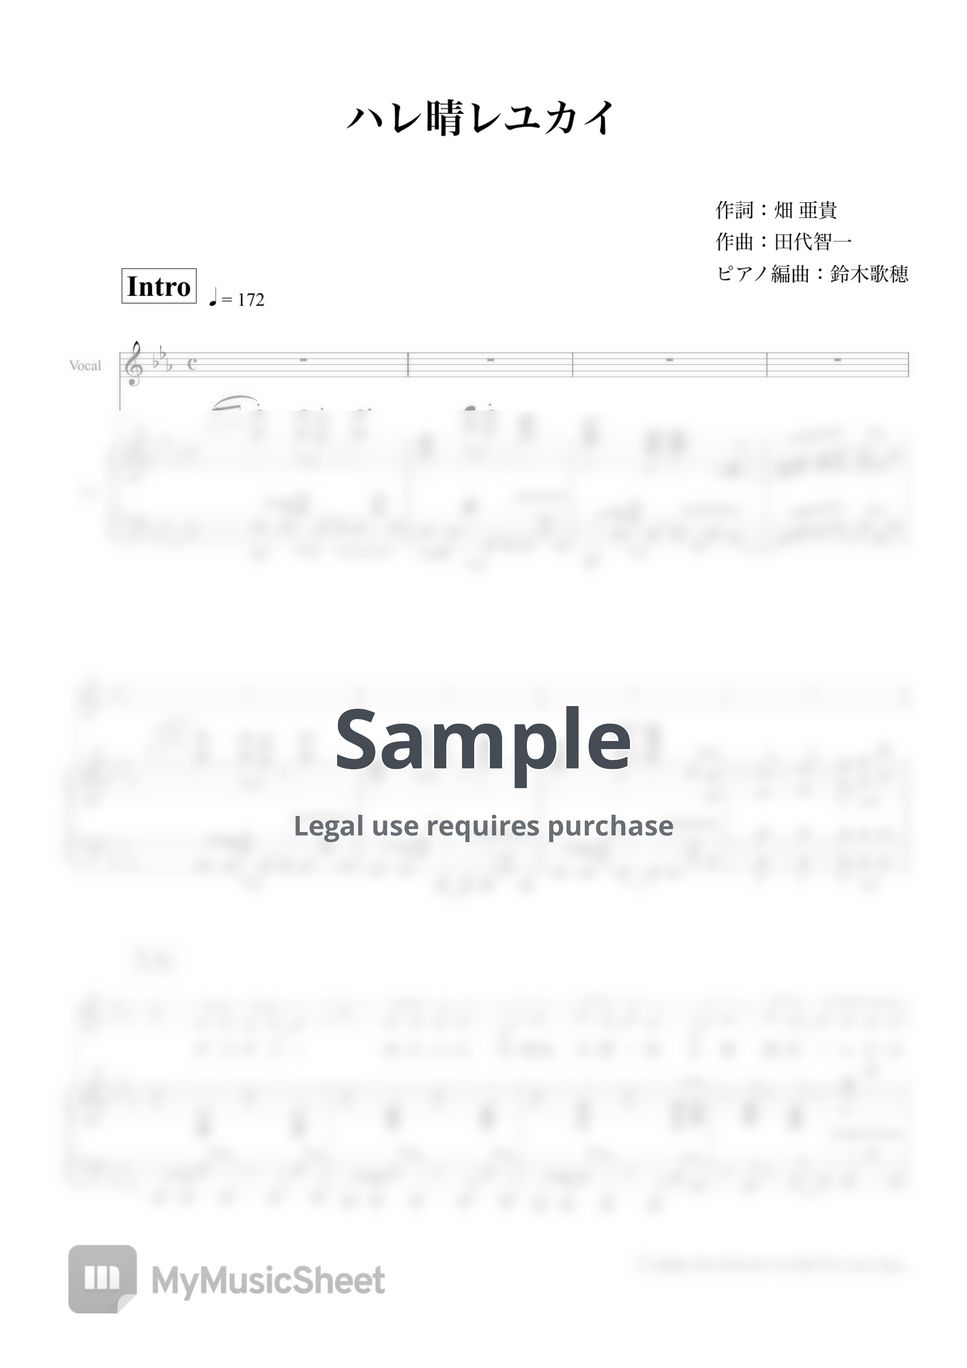 The Melancholy of Haruhi Suzumiya - Hare Hare Yukai (sing with the piano) by Kaho Suzuki (鈴木 歌穂)